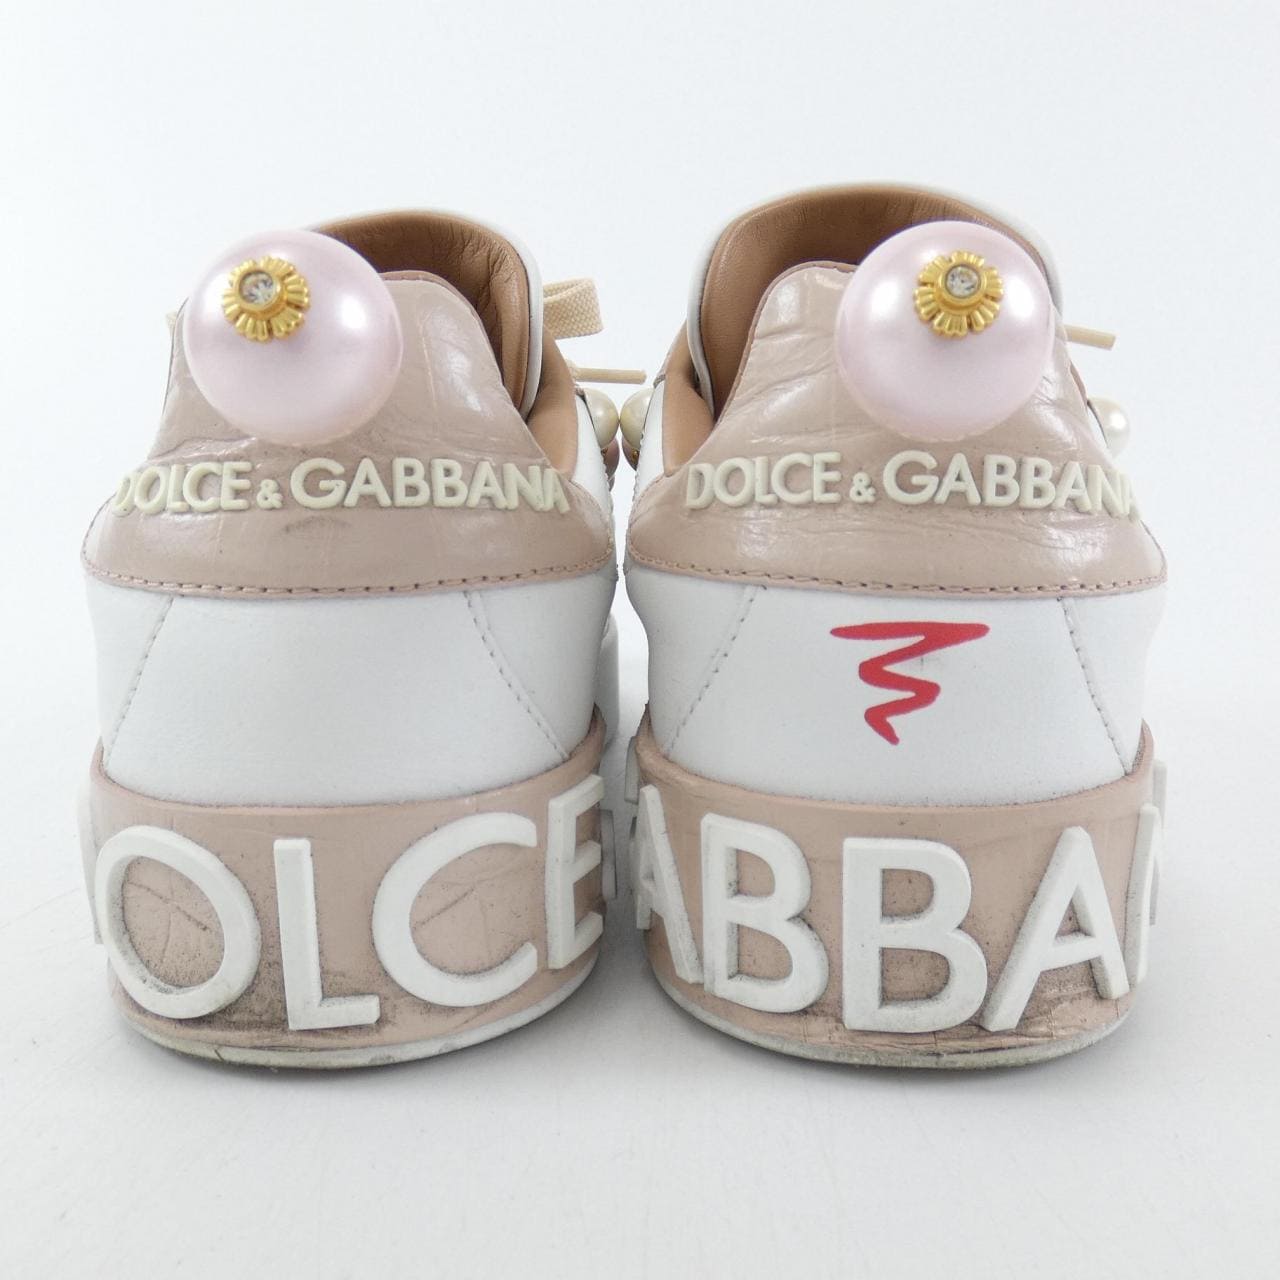 DOLCE&GABBANA杜嘉班納運動鞋